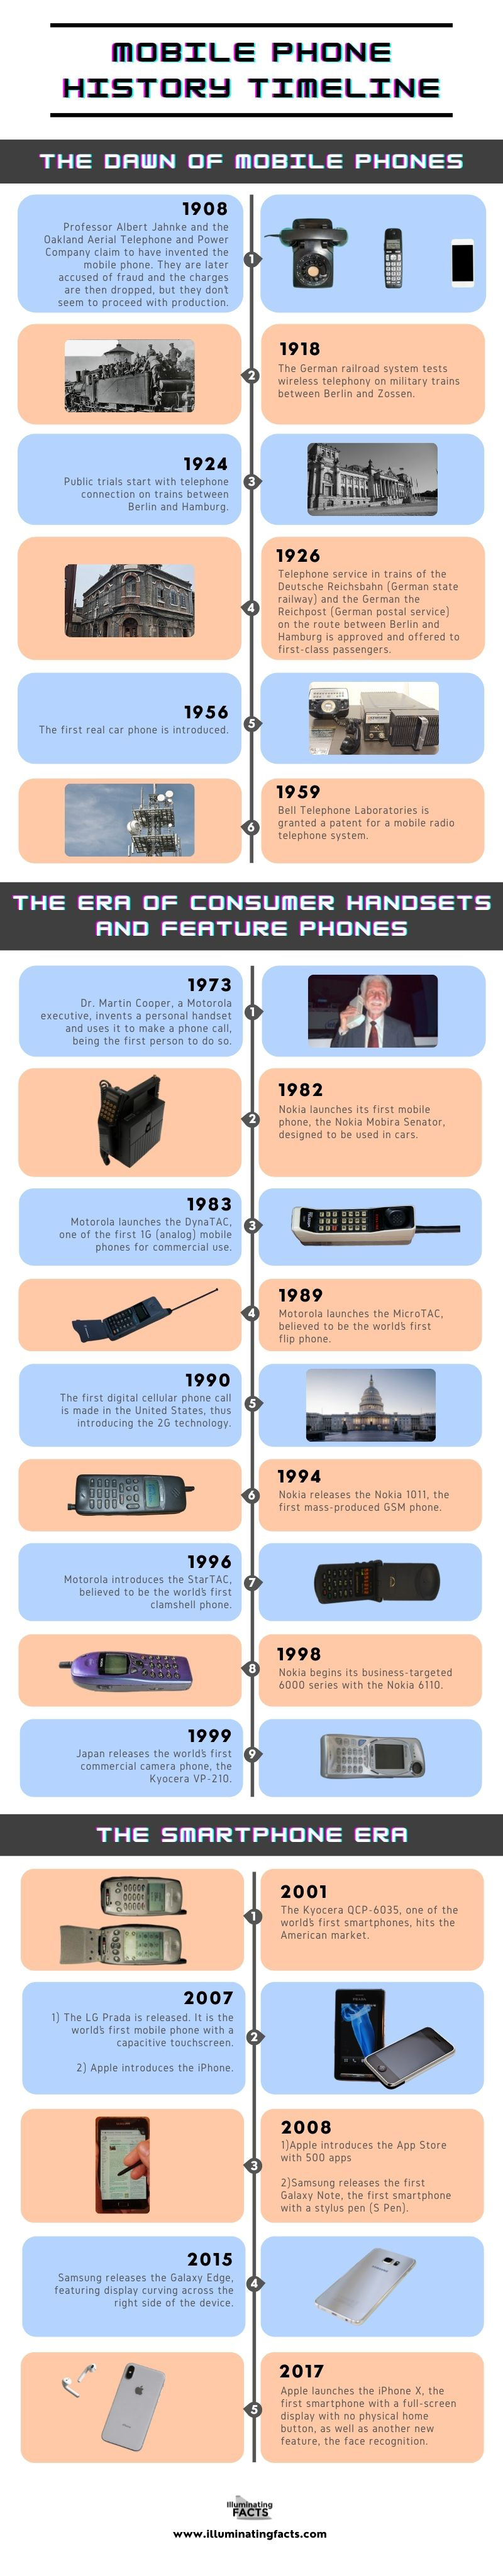 Mobile phone history timeline